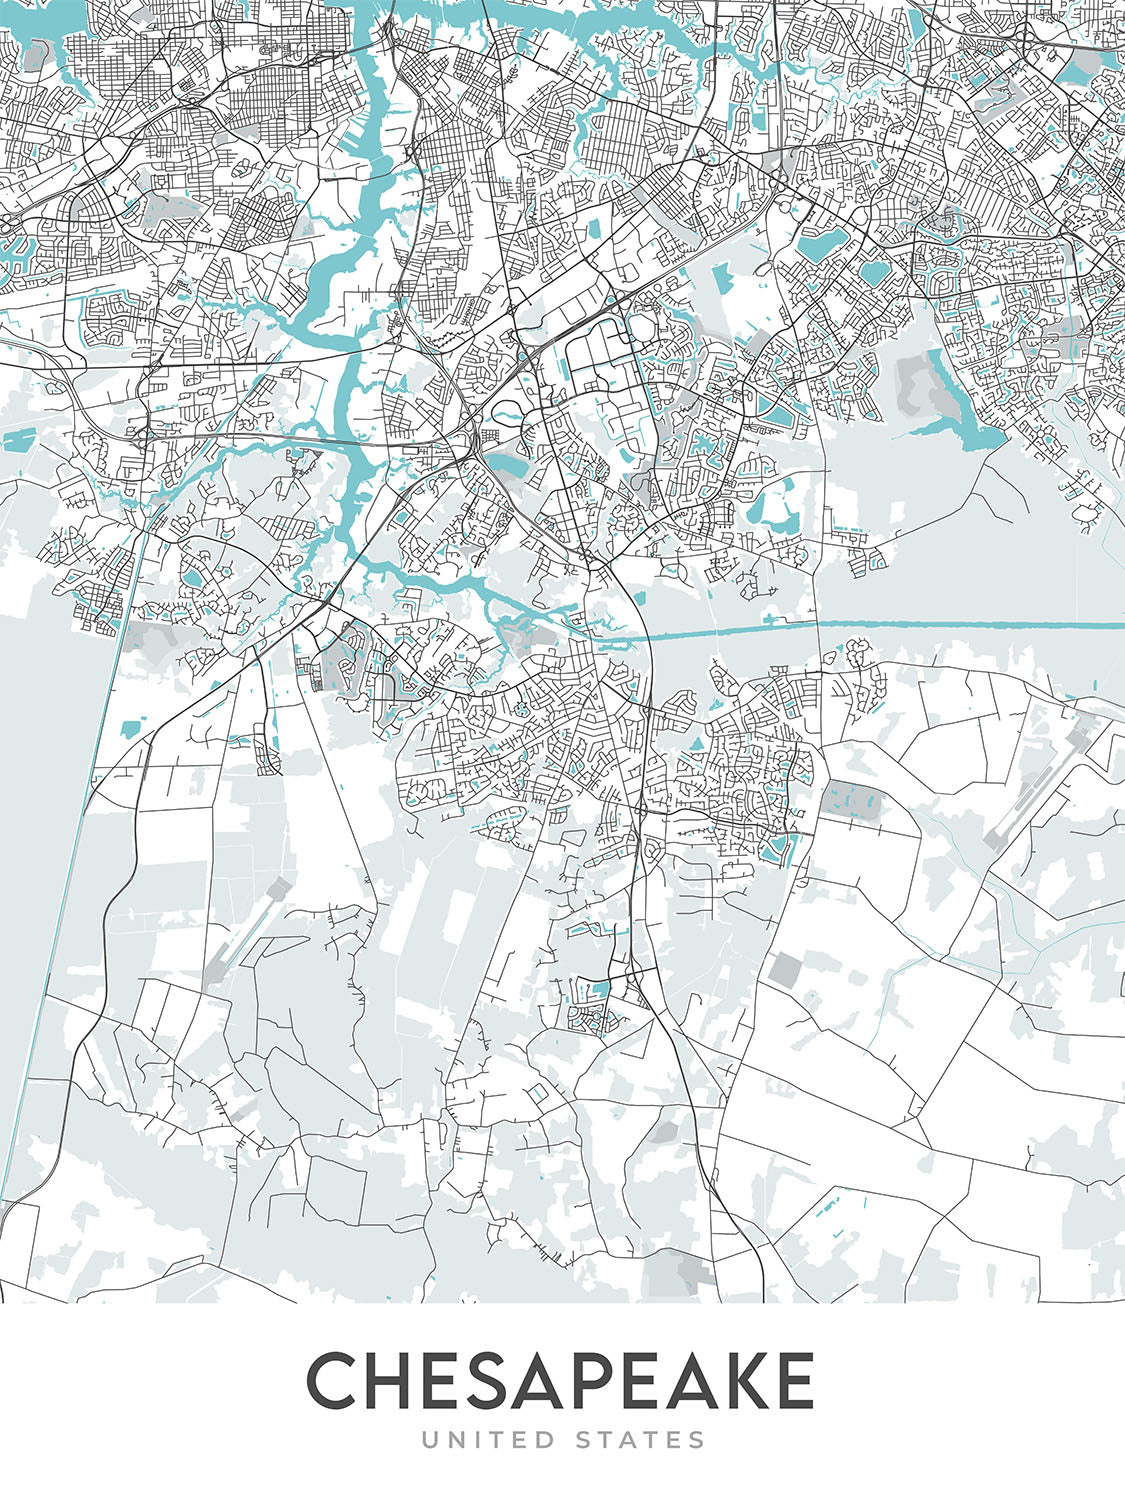 Modern City Map of Chesapeake, VA: Chesapeake Bay, Norfolk, Great Dismal Swamp, I-64